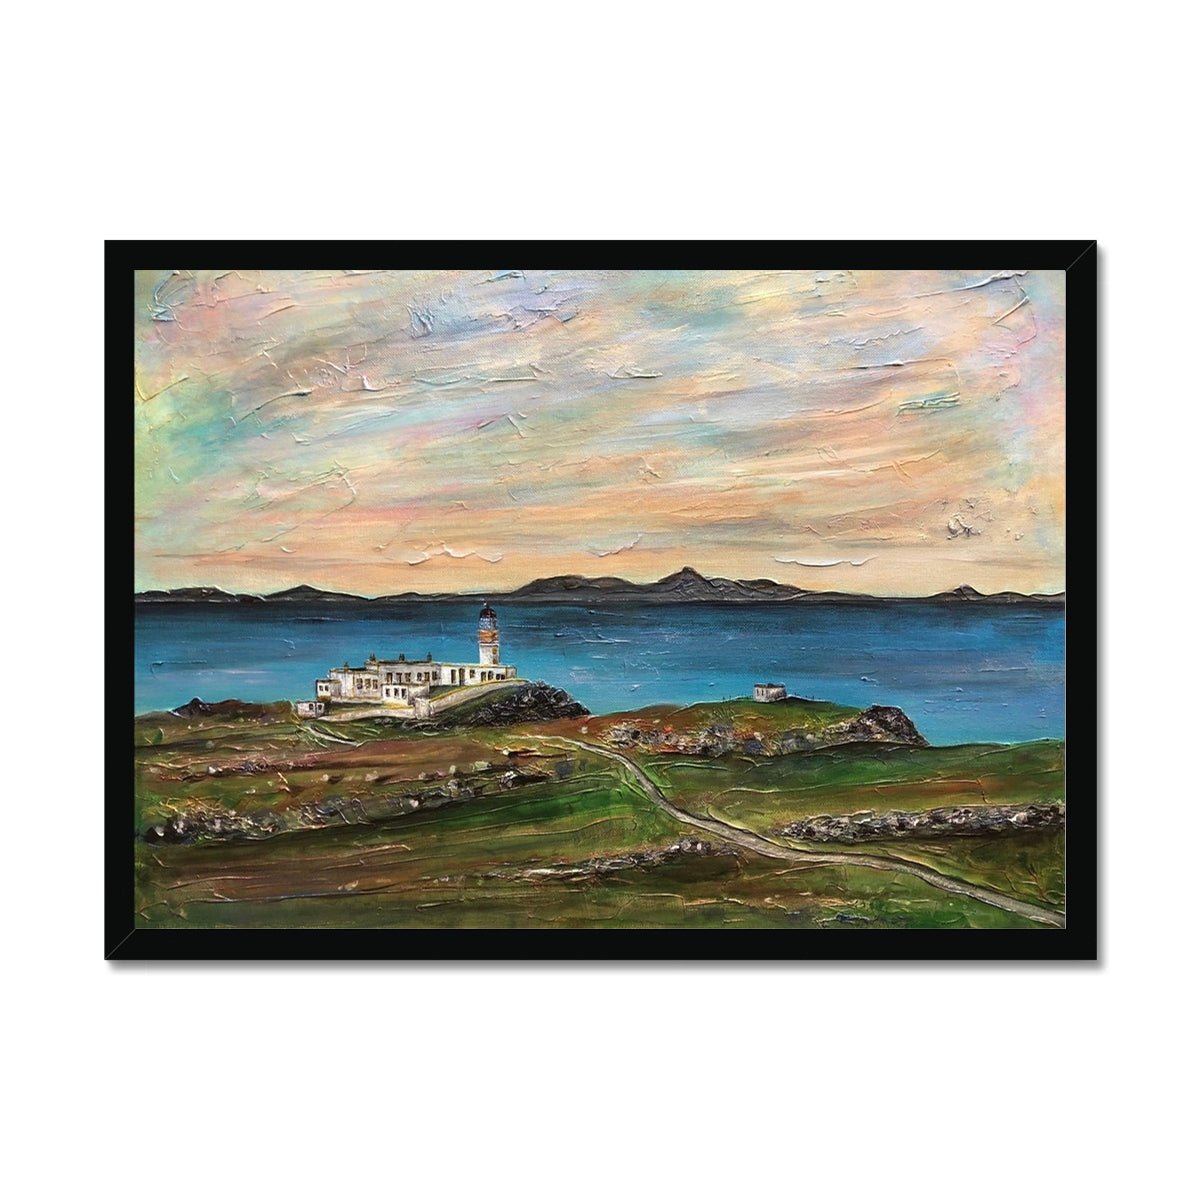 Neist Point Skye Painting | Framed Prints From Scotland-Framed Prints-Skye Art Gallery-A2 Landscape-Black Frame-Paintings, Prints, Homeware, Art Gifts From Scotland By Scottish Artist Kevin Hunter